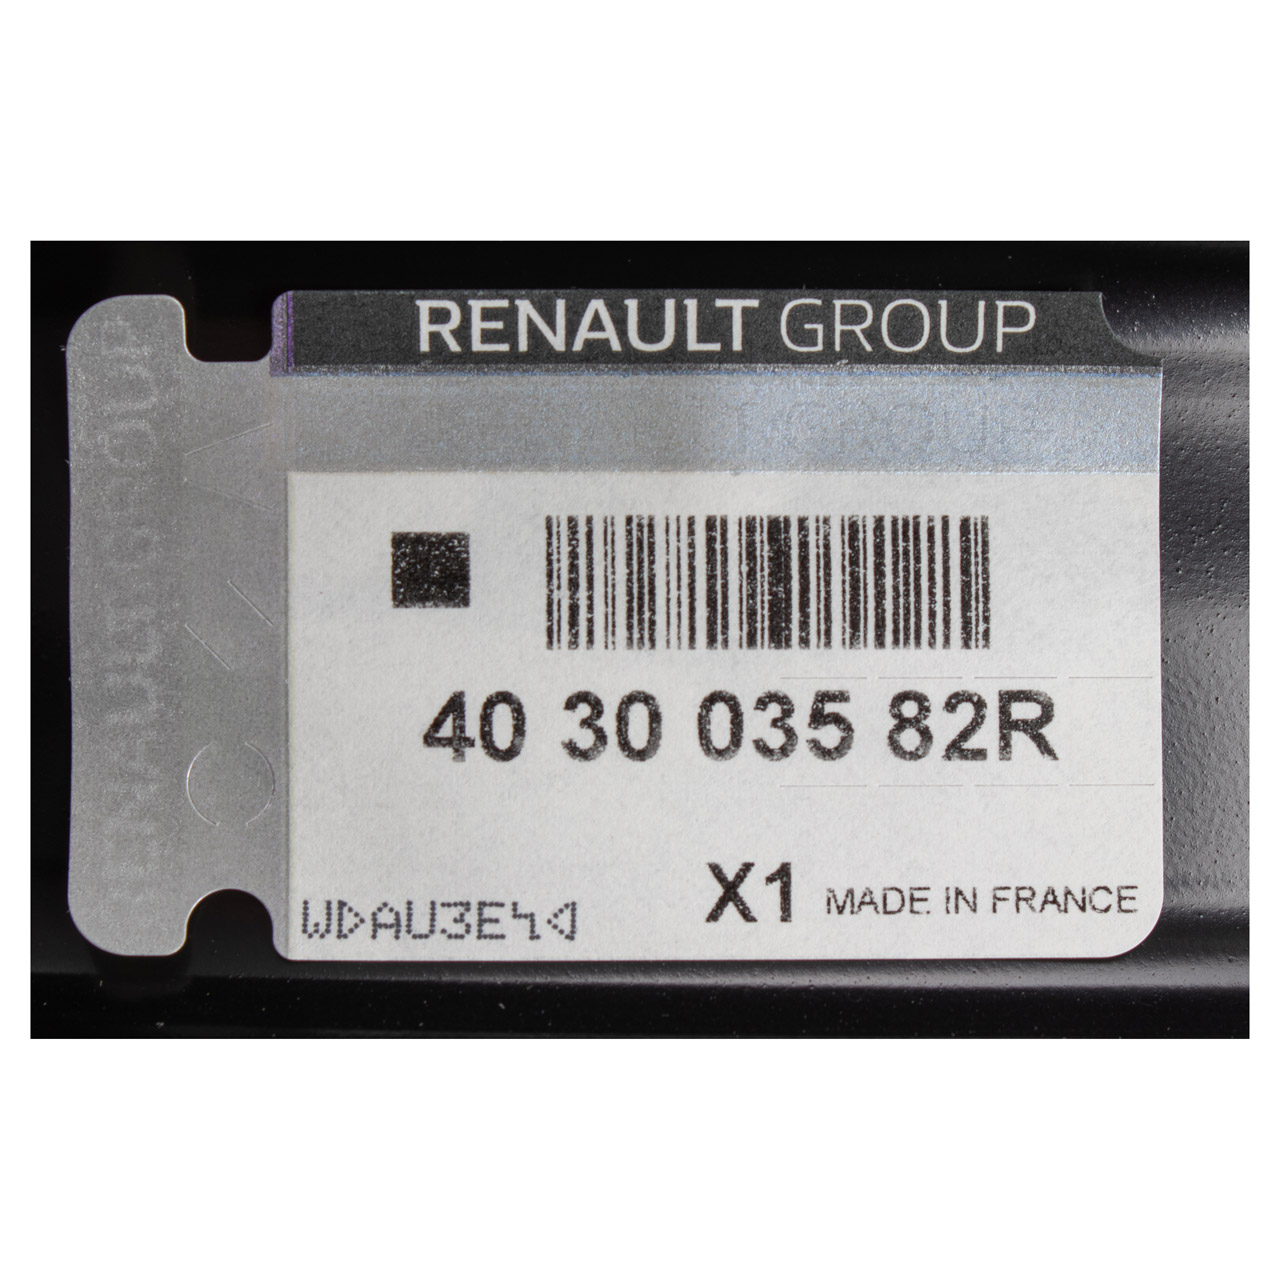 ORIGINAL Renault Felge Stahlfelge 6,5x16 Zoll 5-Loch ET66 Master 3 403003582R